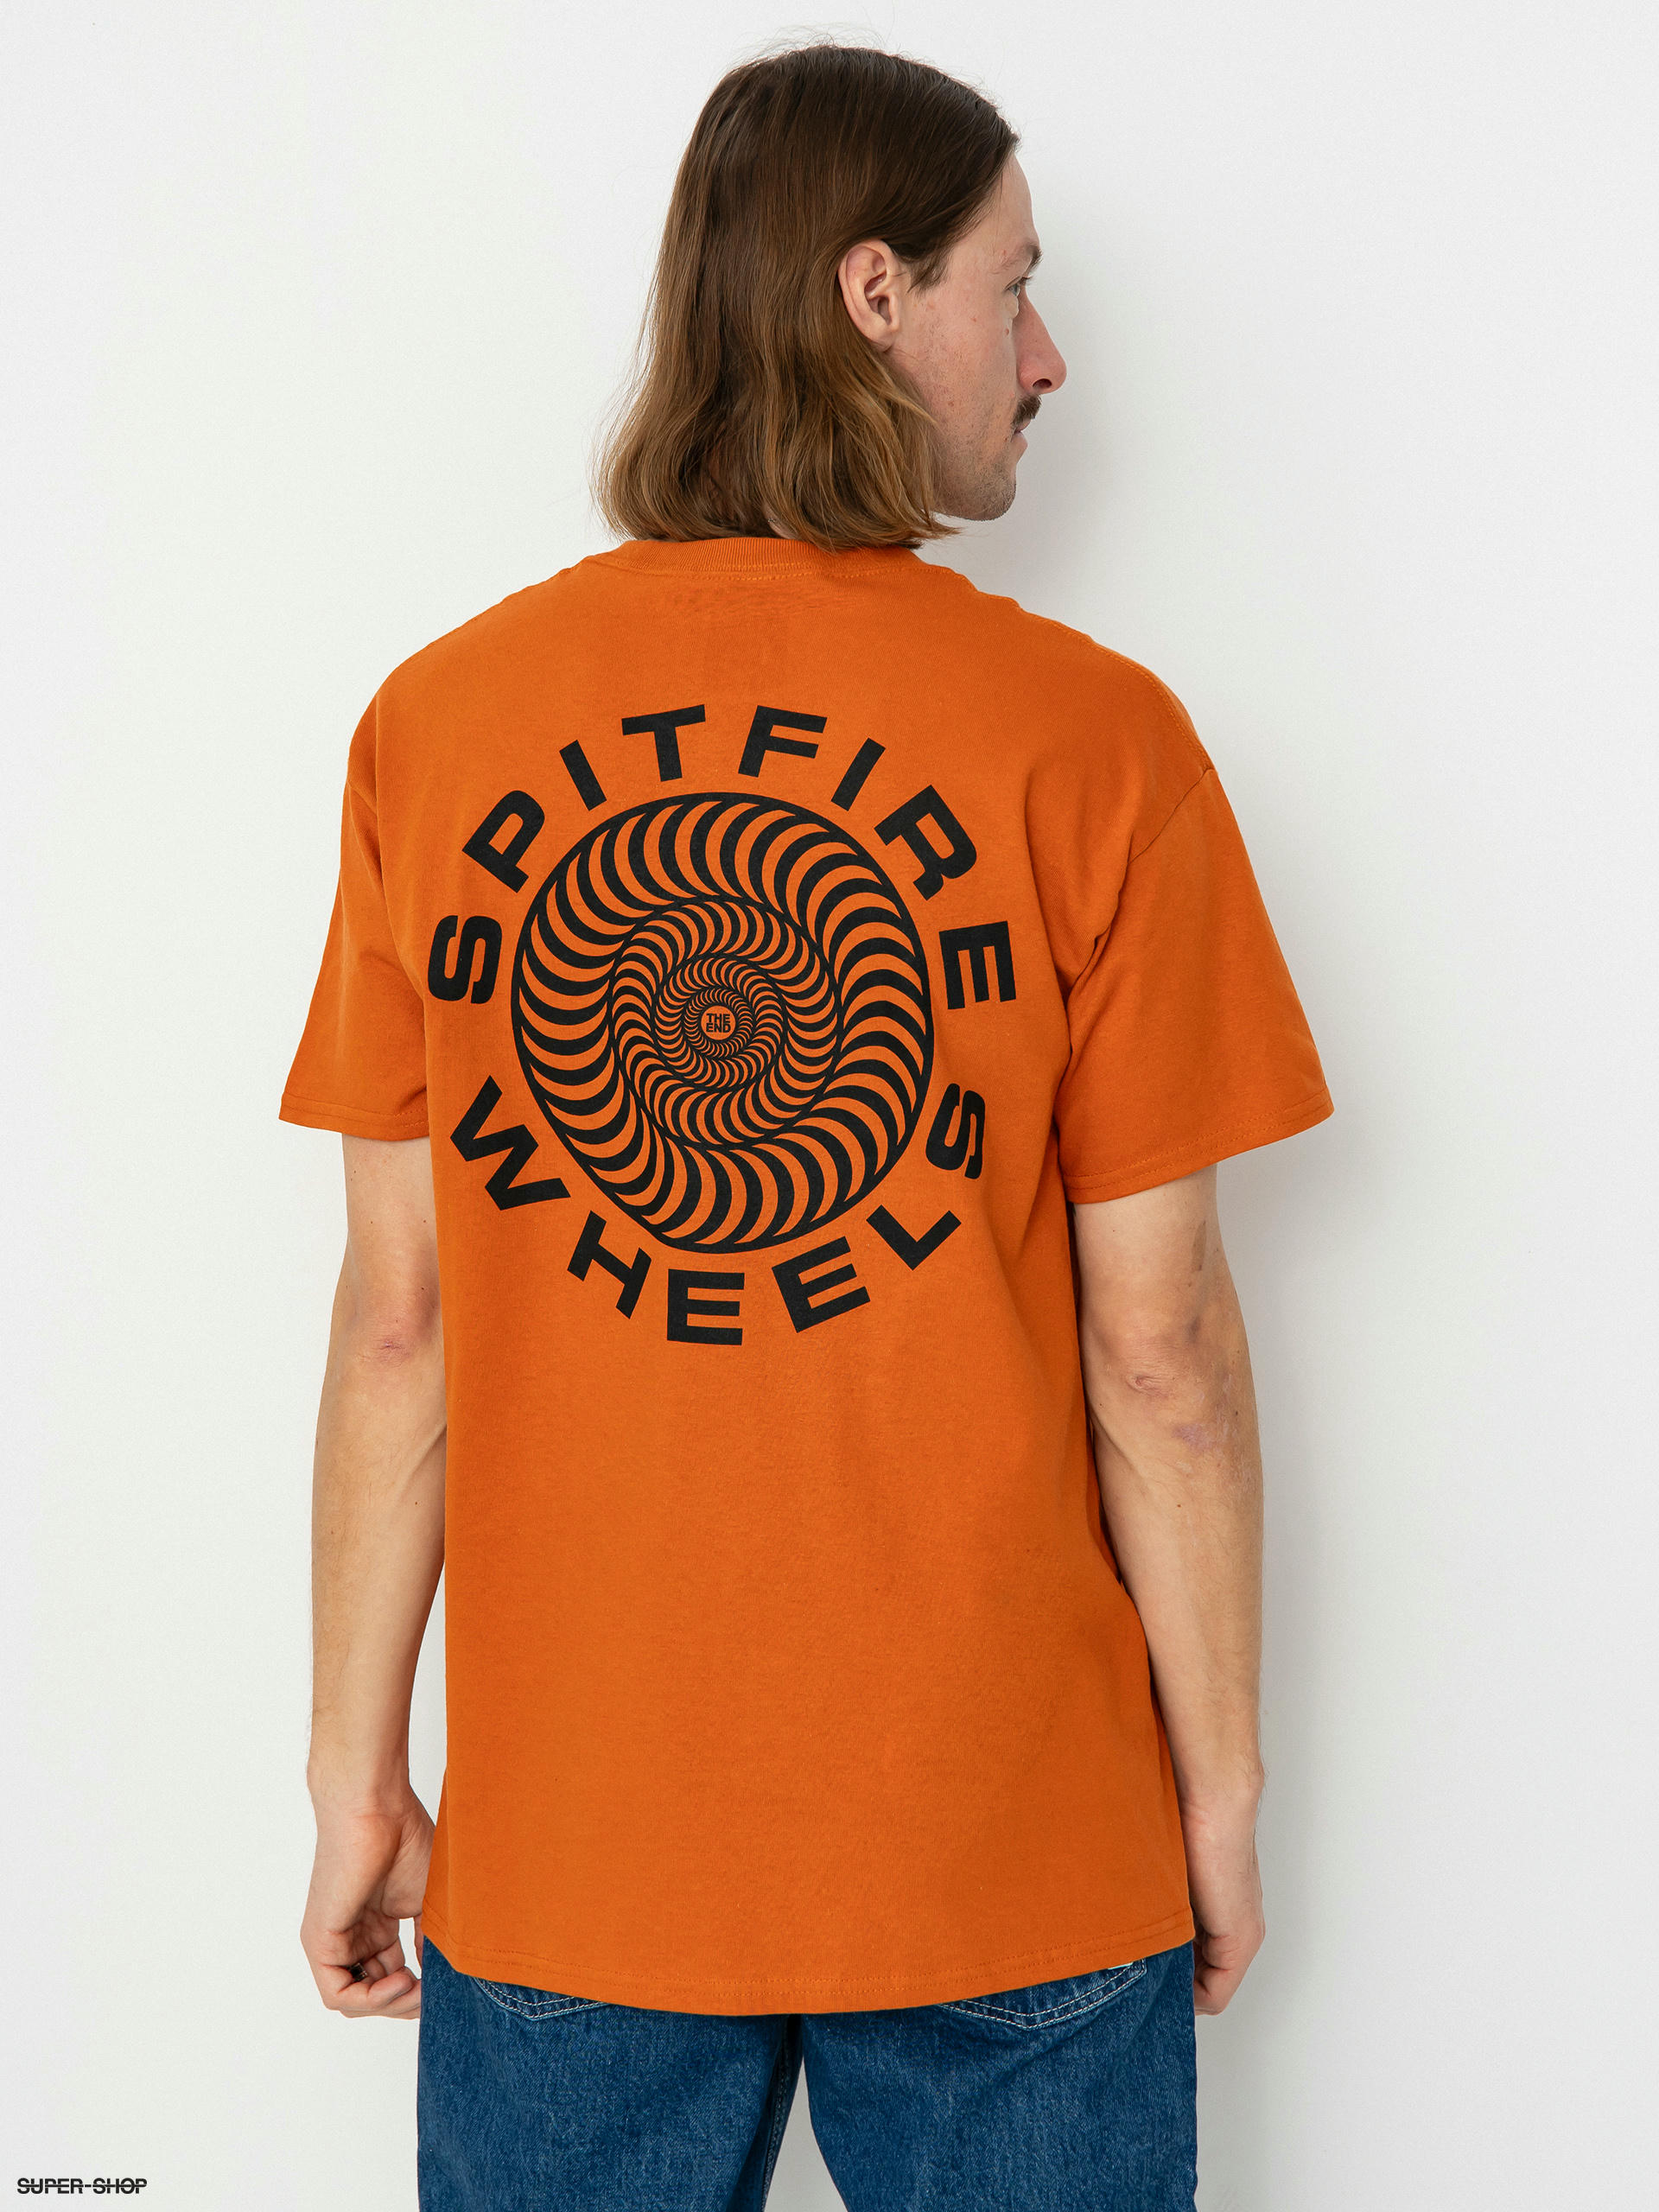 Spitfire Classic 87 Swirl T-shirt (orange/black)